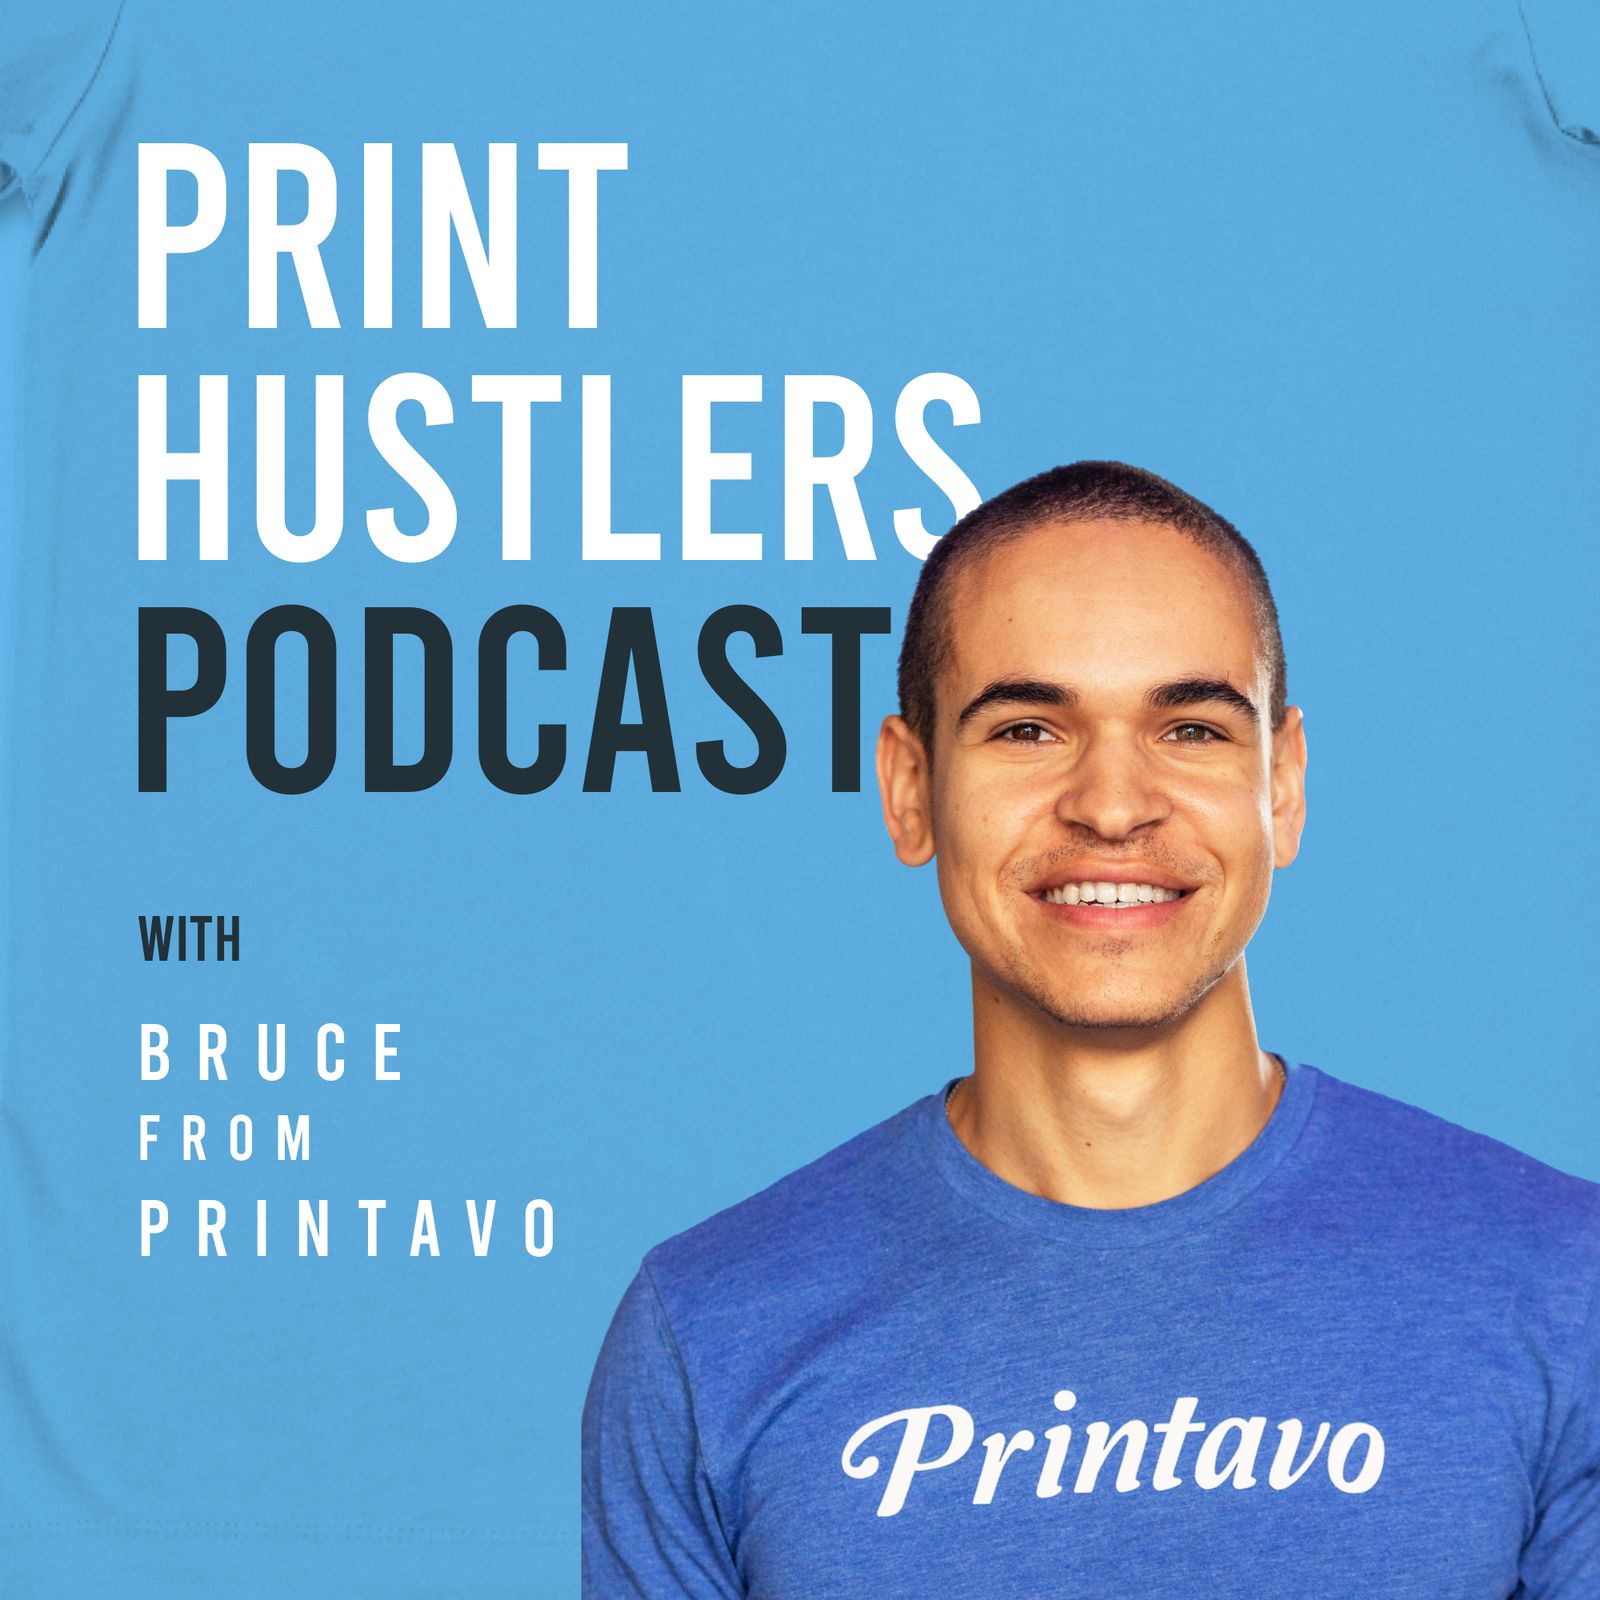 Printavo PrintHustlers Podcast